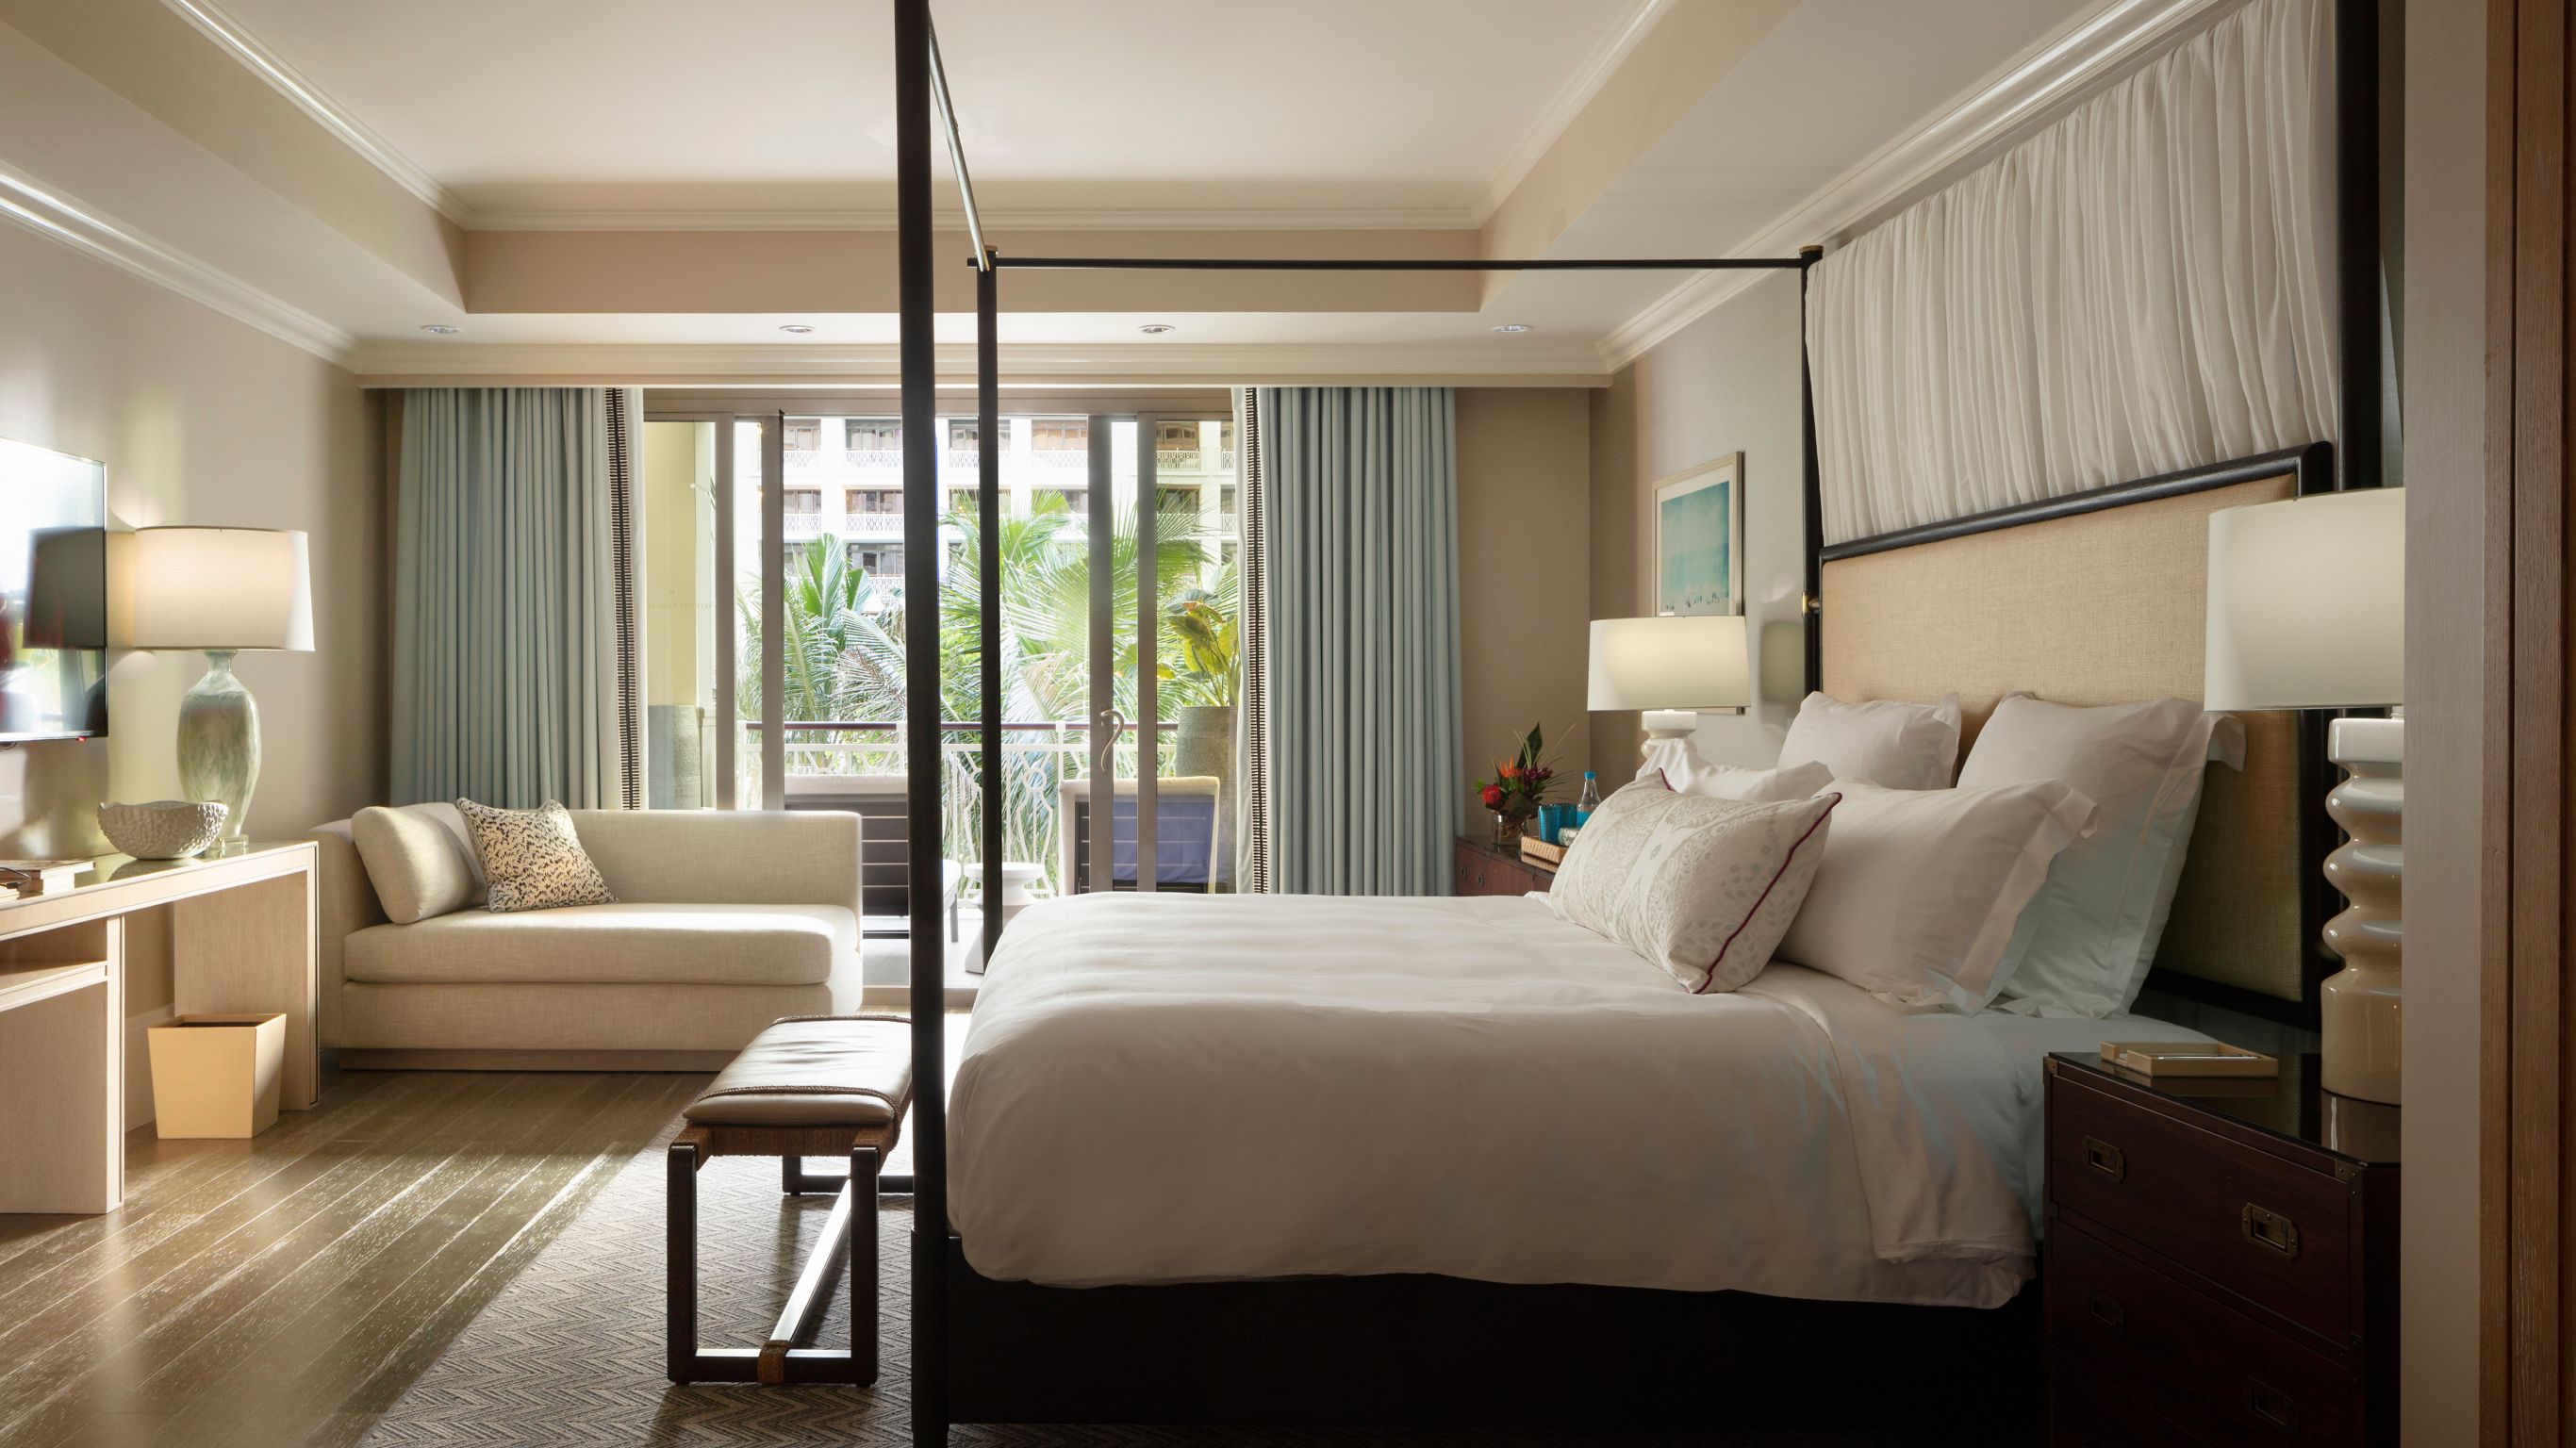 One bedroom suite. Rosewood Hotel London. .Blend комната. Rosewood Hotel. Rosewood Hotel Bangkok.